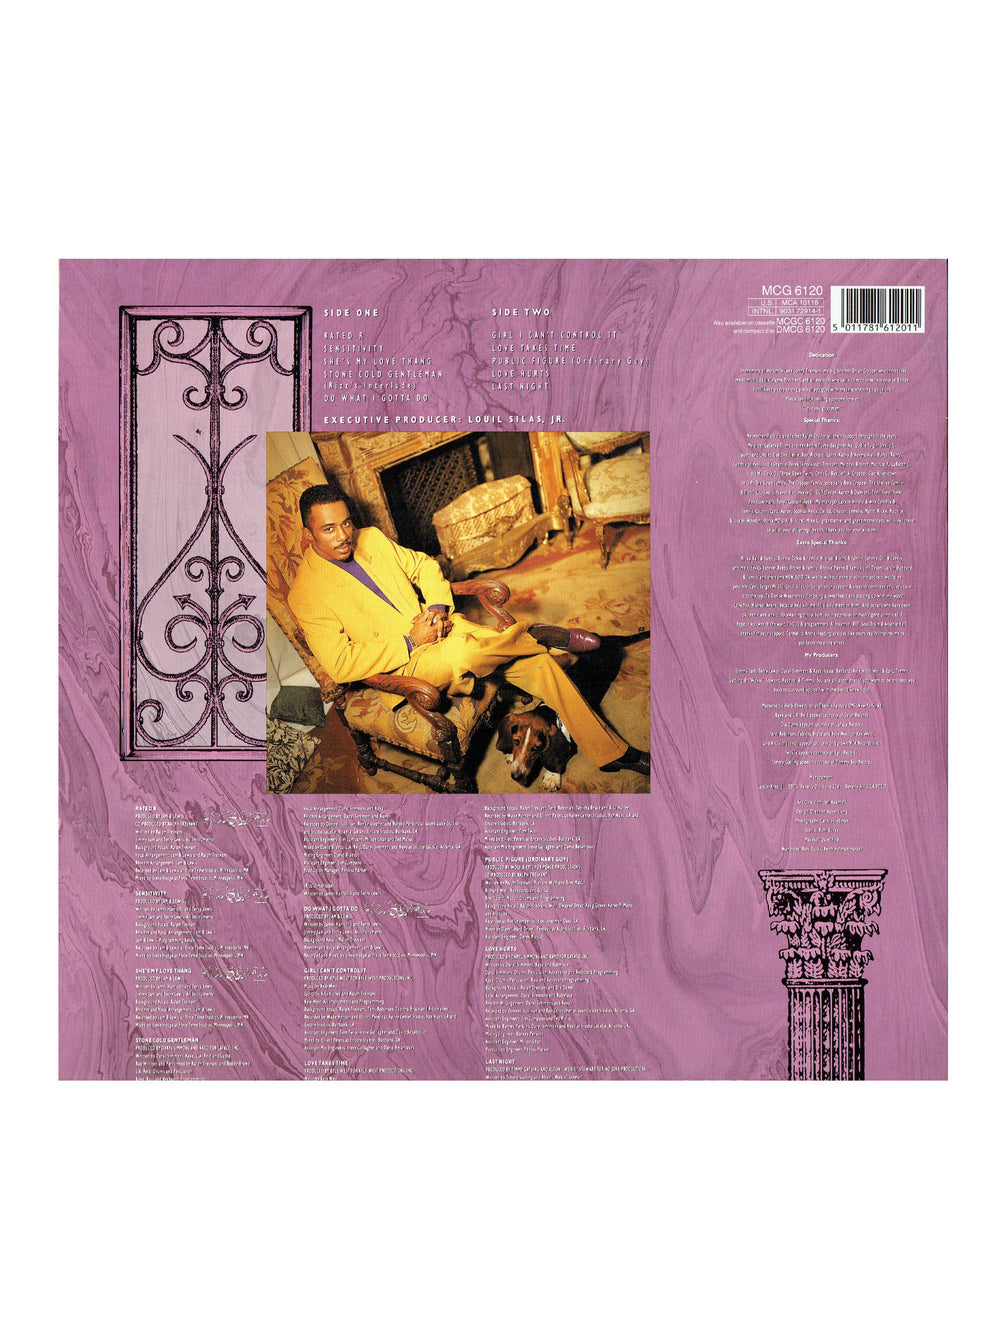 Prince – Ralph Tresvant Self Titled Vinyl Album 1990 UK Release Jam & Lewis Prince